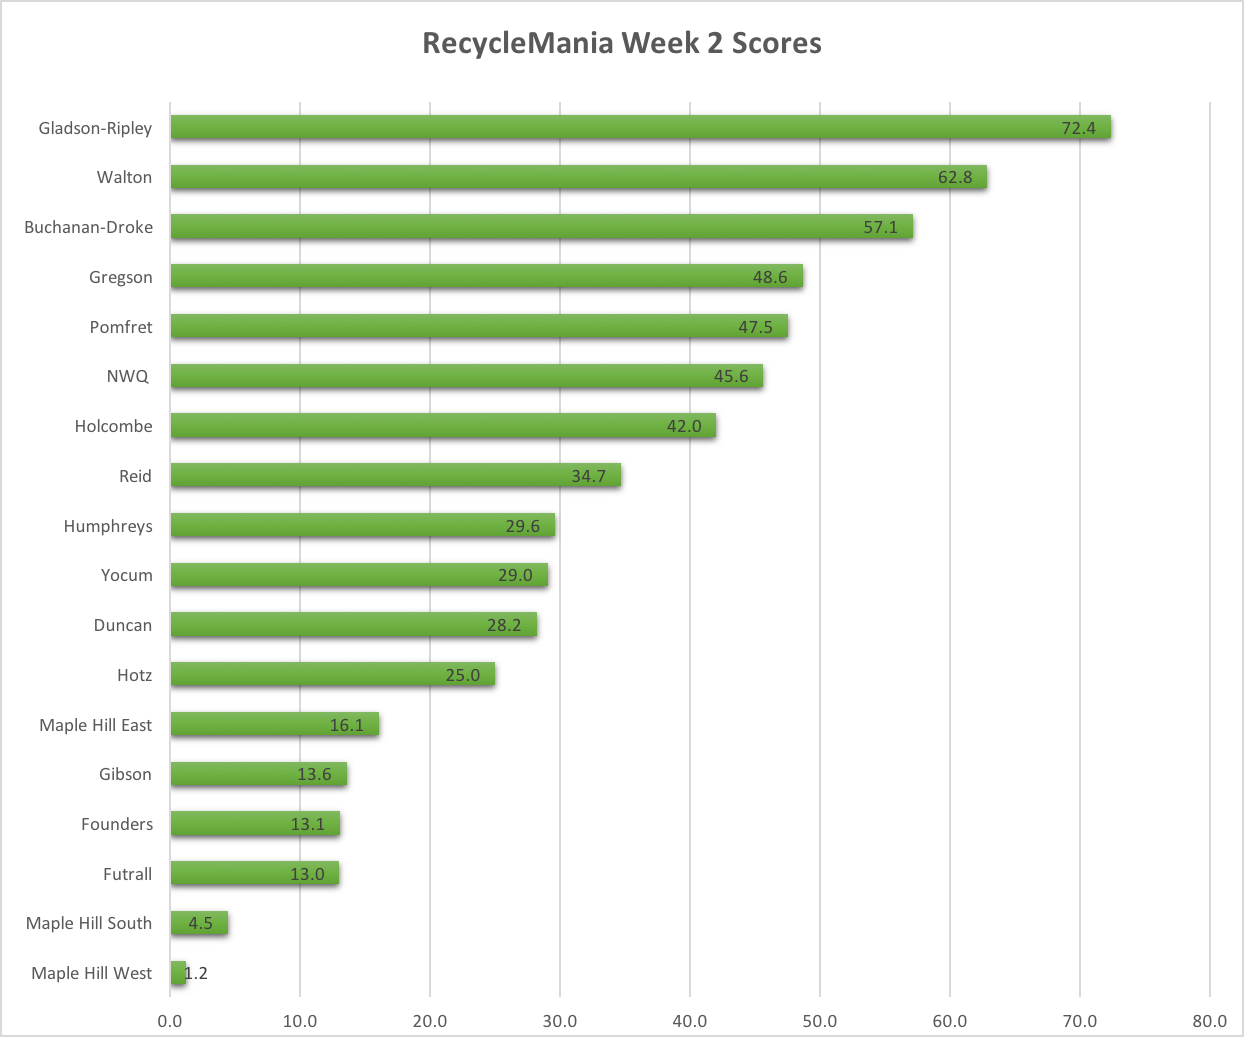 Gladson-Ripley Pulls Ahead | RecycleMania: Week 2